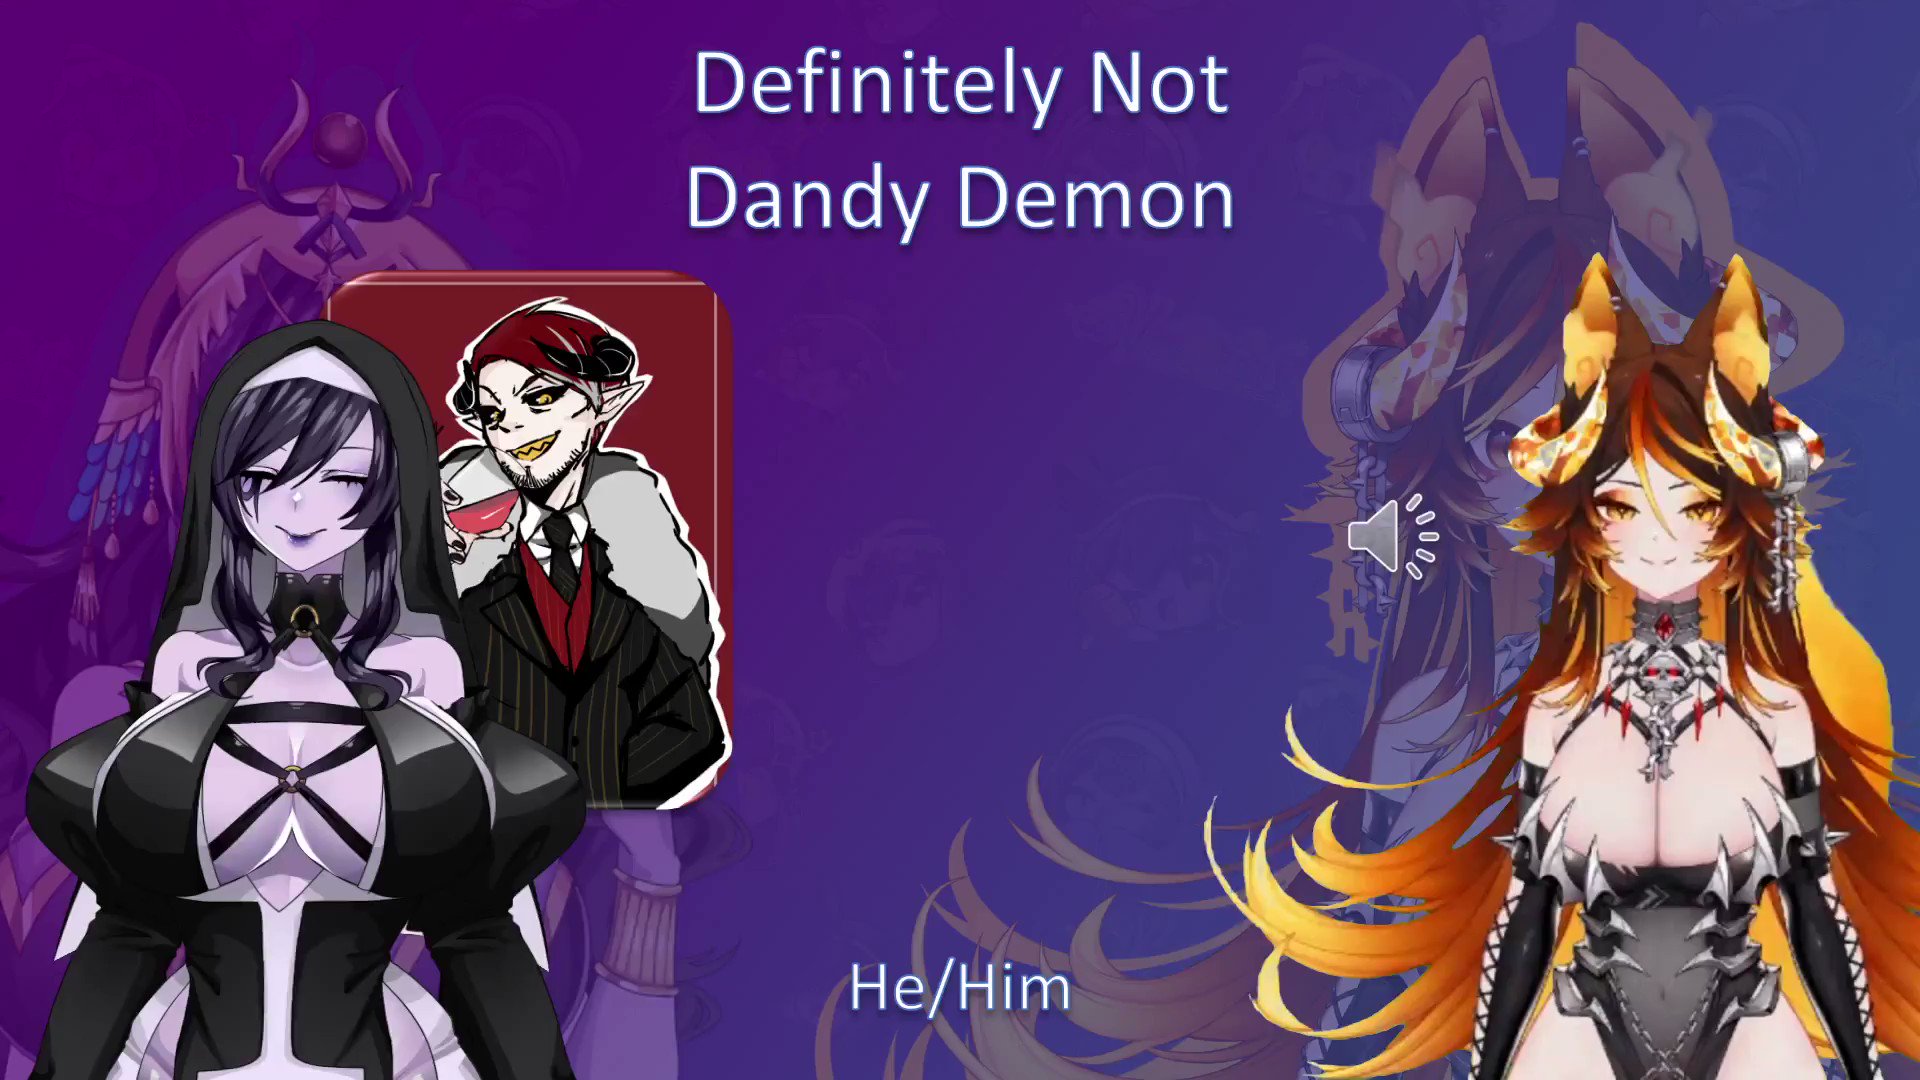 Dandy demon